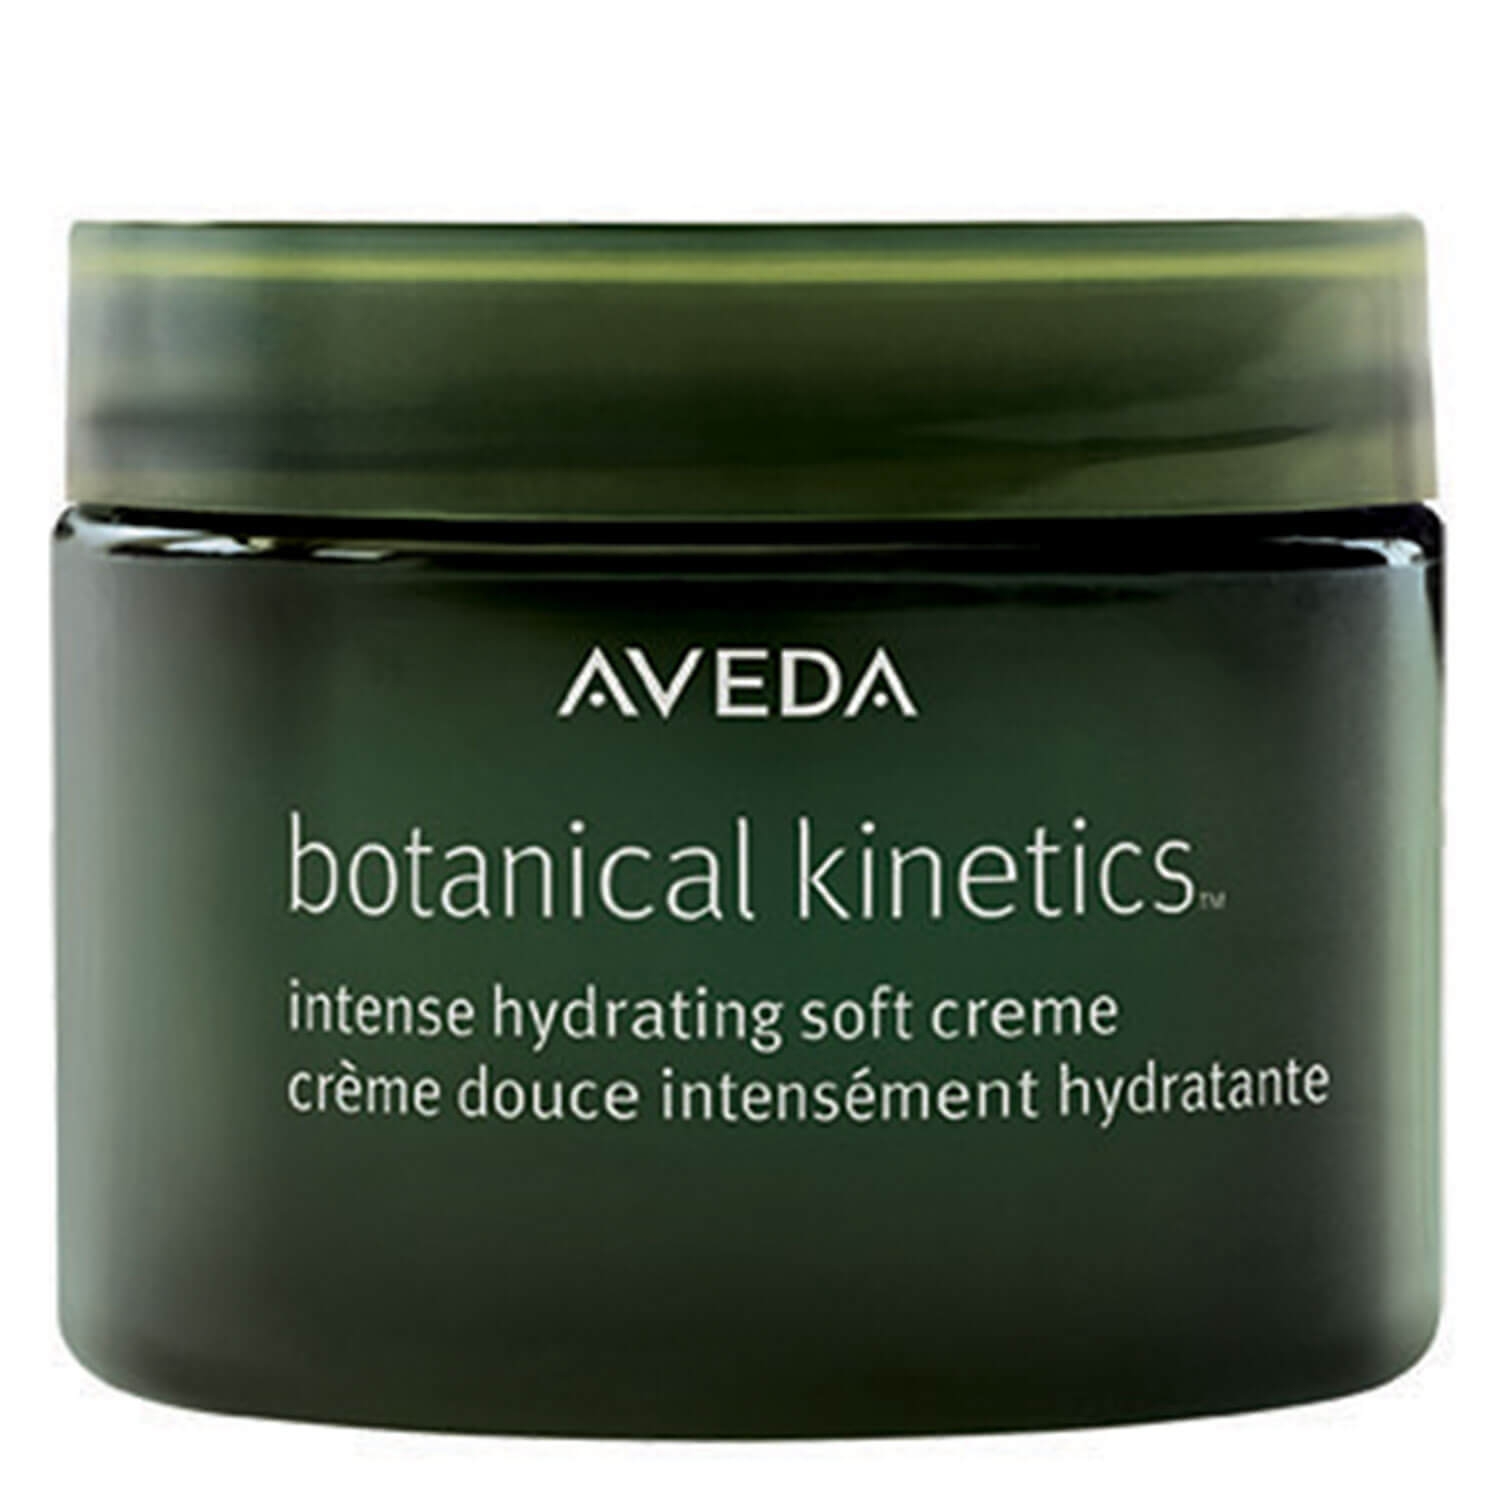 Product image from botanical kinetics - intense hydrating soft creme